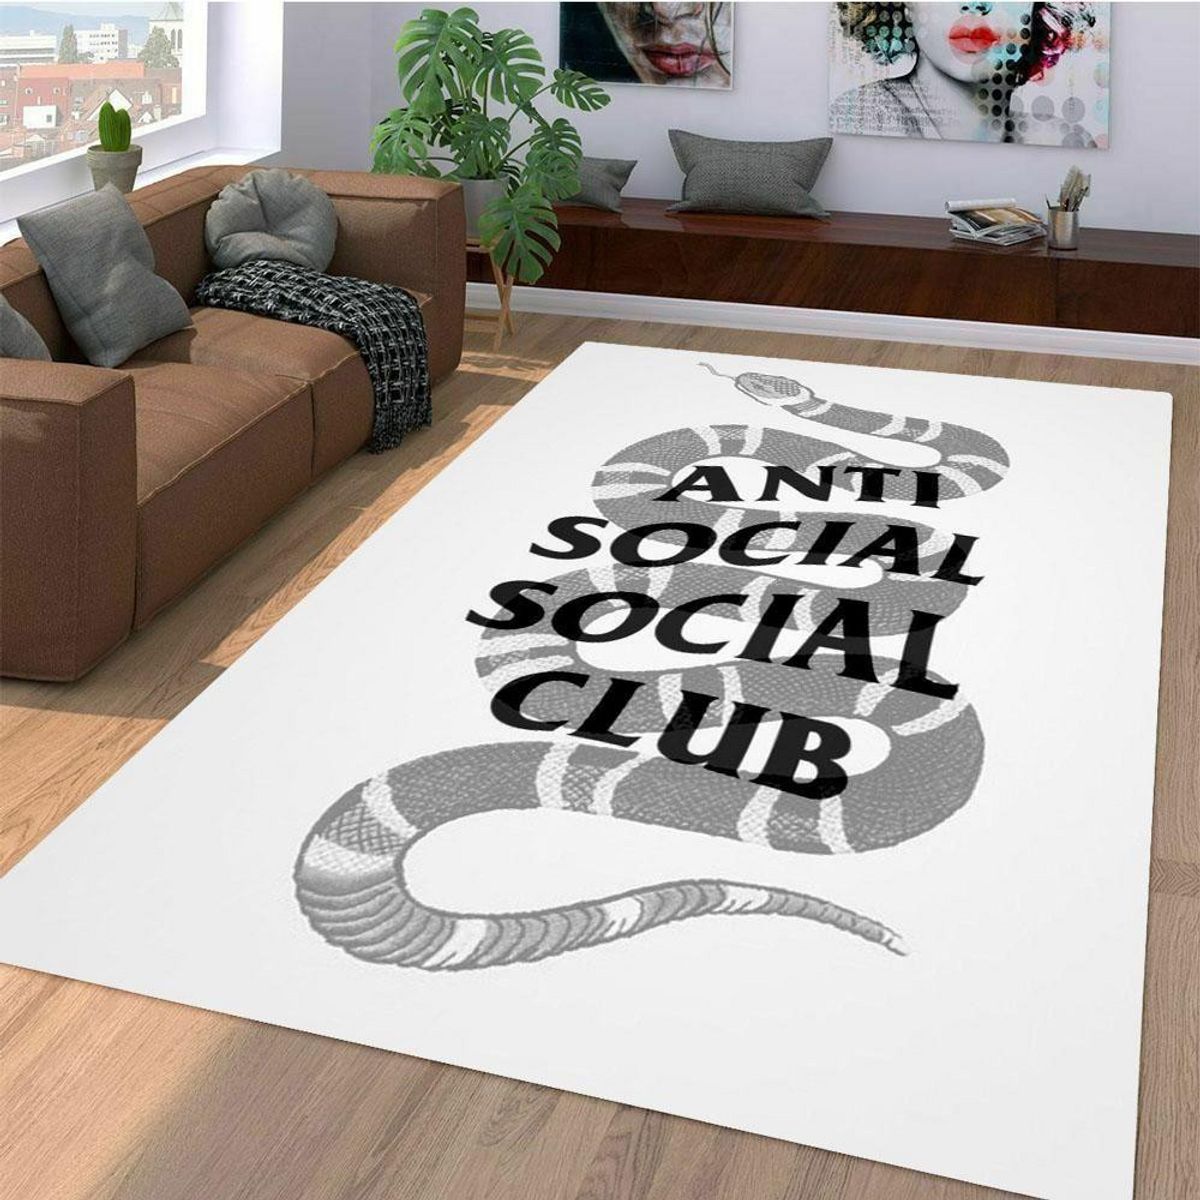 Gucci Anti Social Club Luxury Brand Carpet Rug Limited Edition